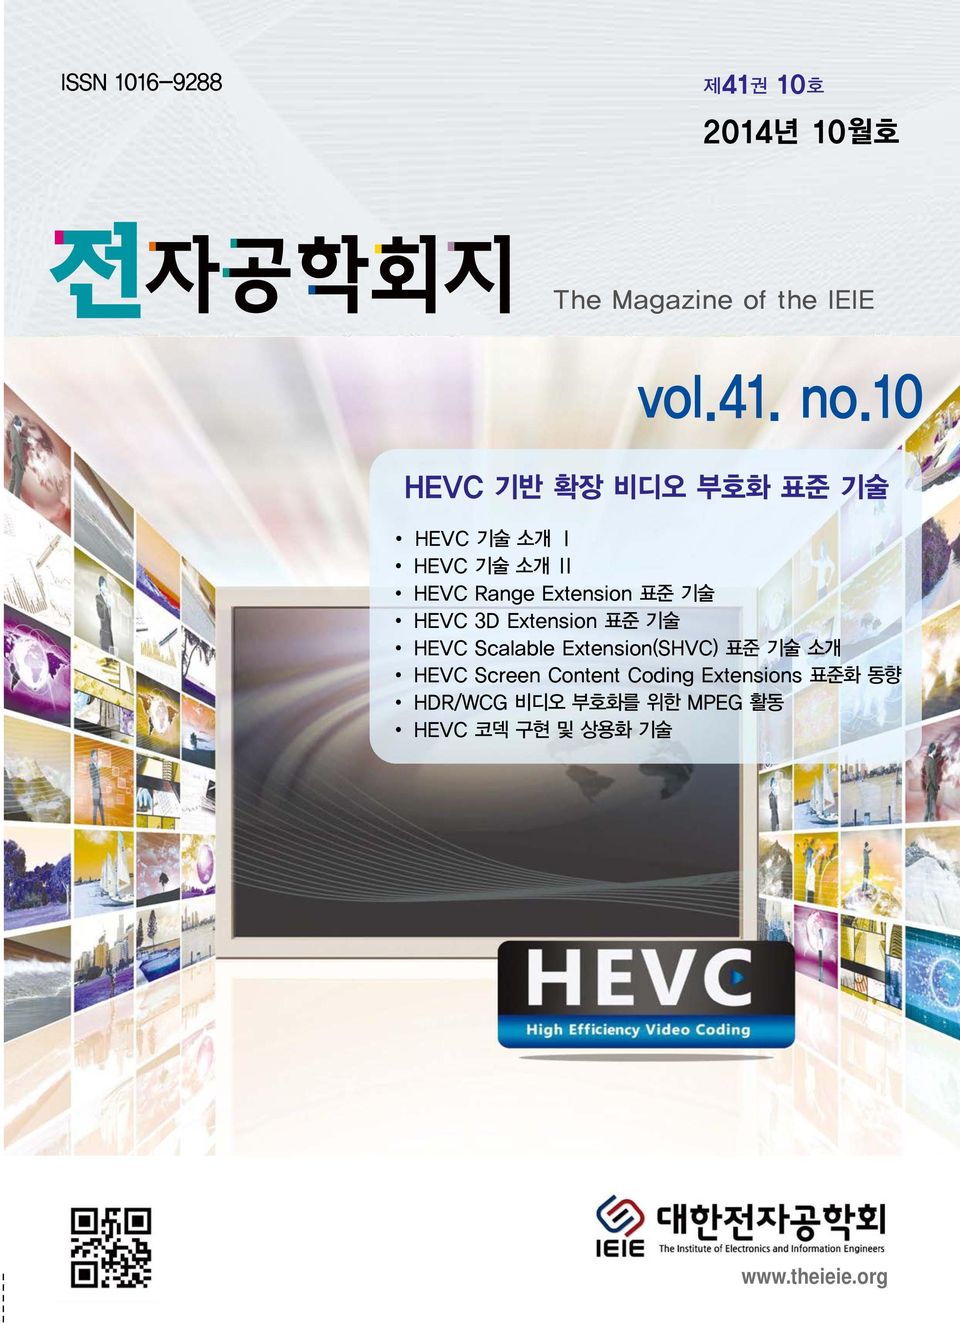 HEVC 3D Extension 표준 기술 HEVC Scalable Extension(SHVC) 표준 기술 소개 HEVC Screen